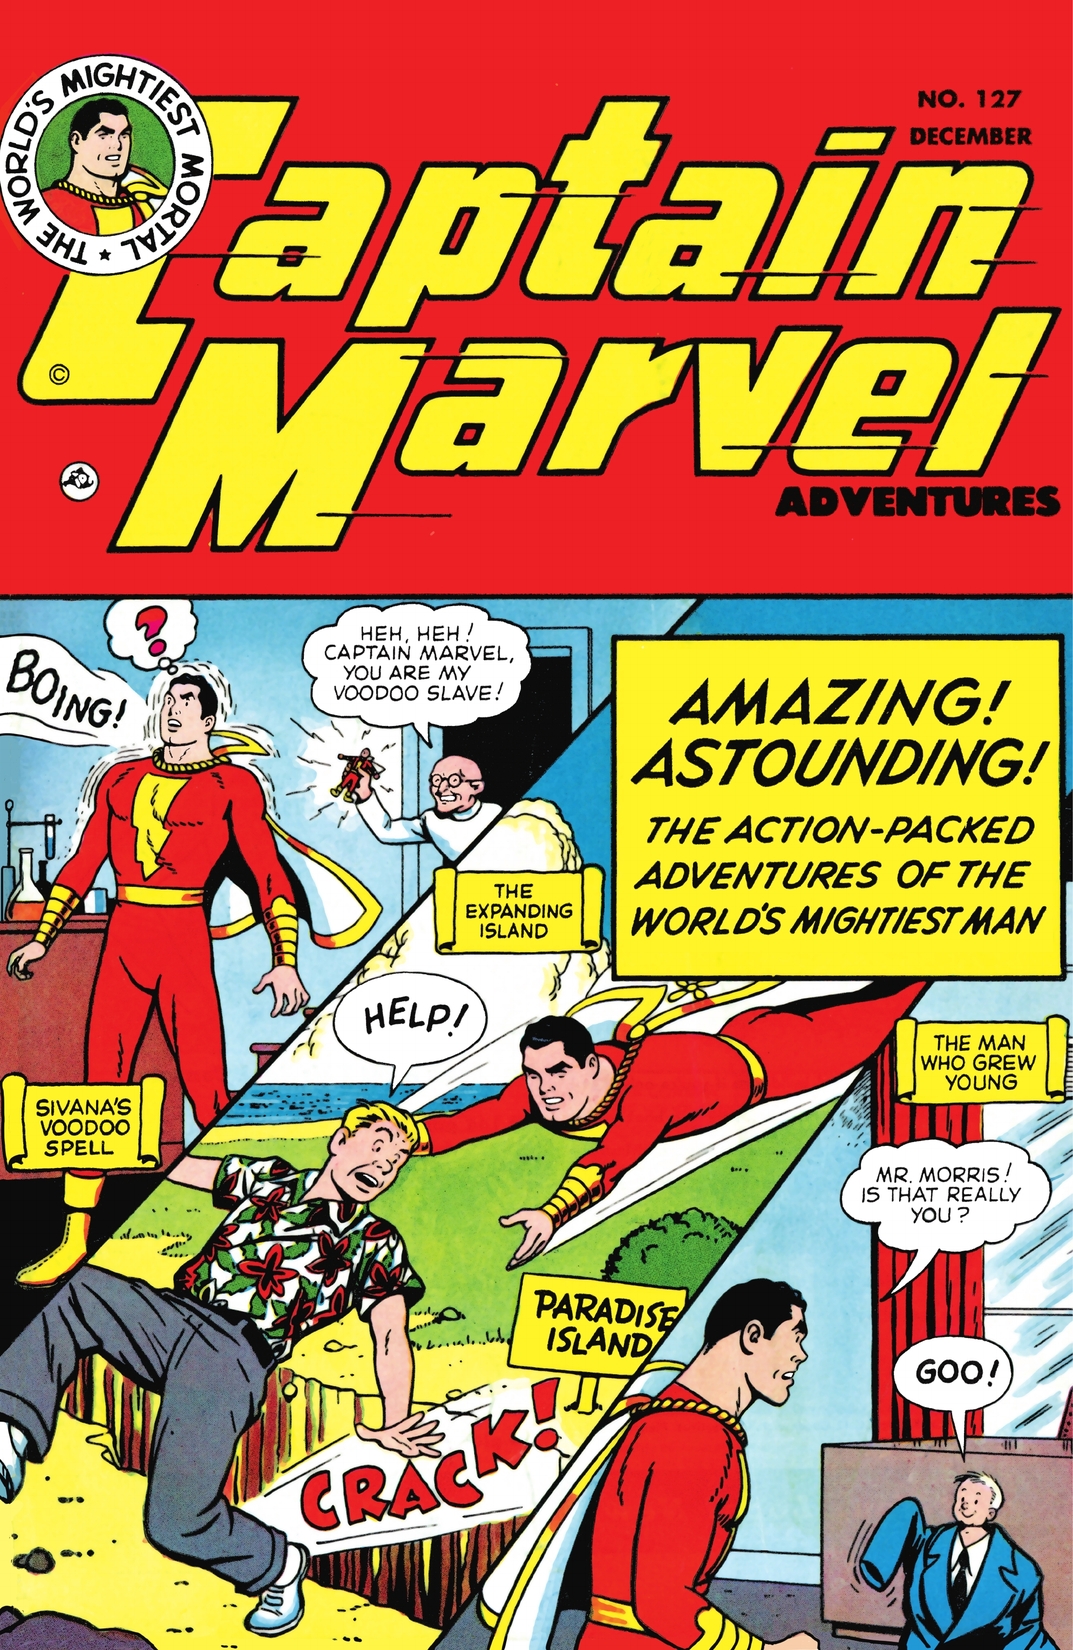 Captain Marvel Adventures #127 preview images